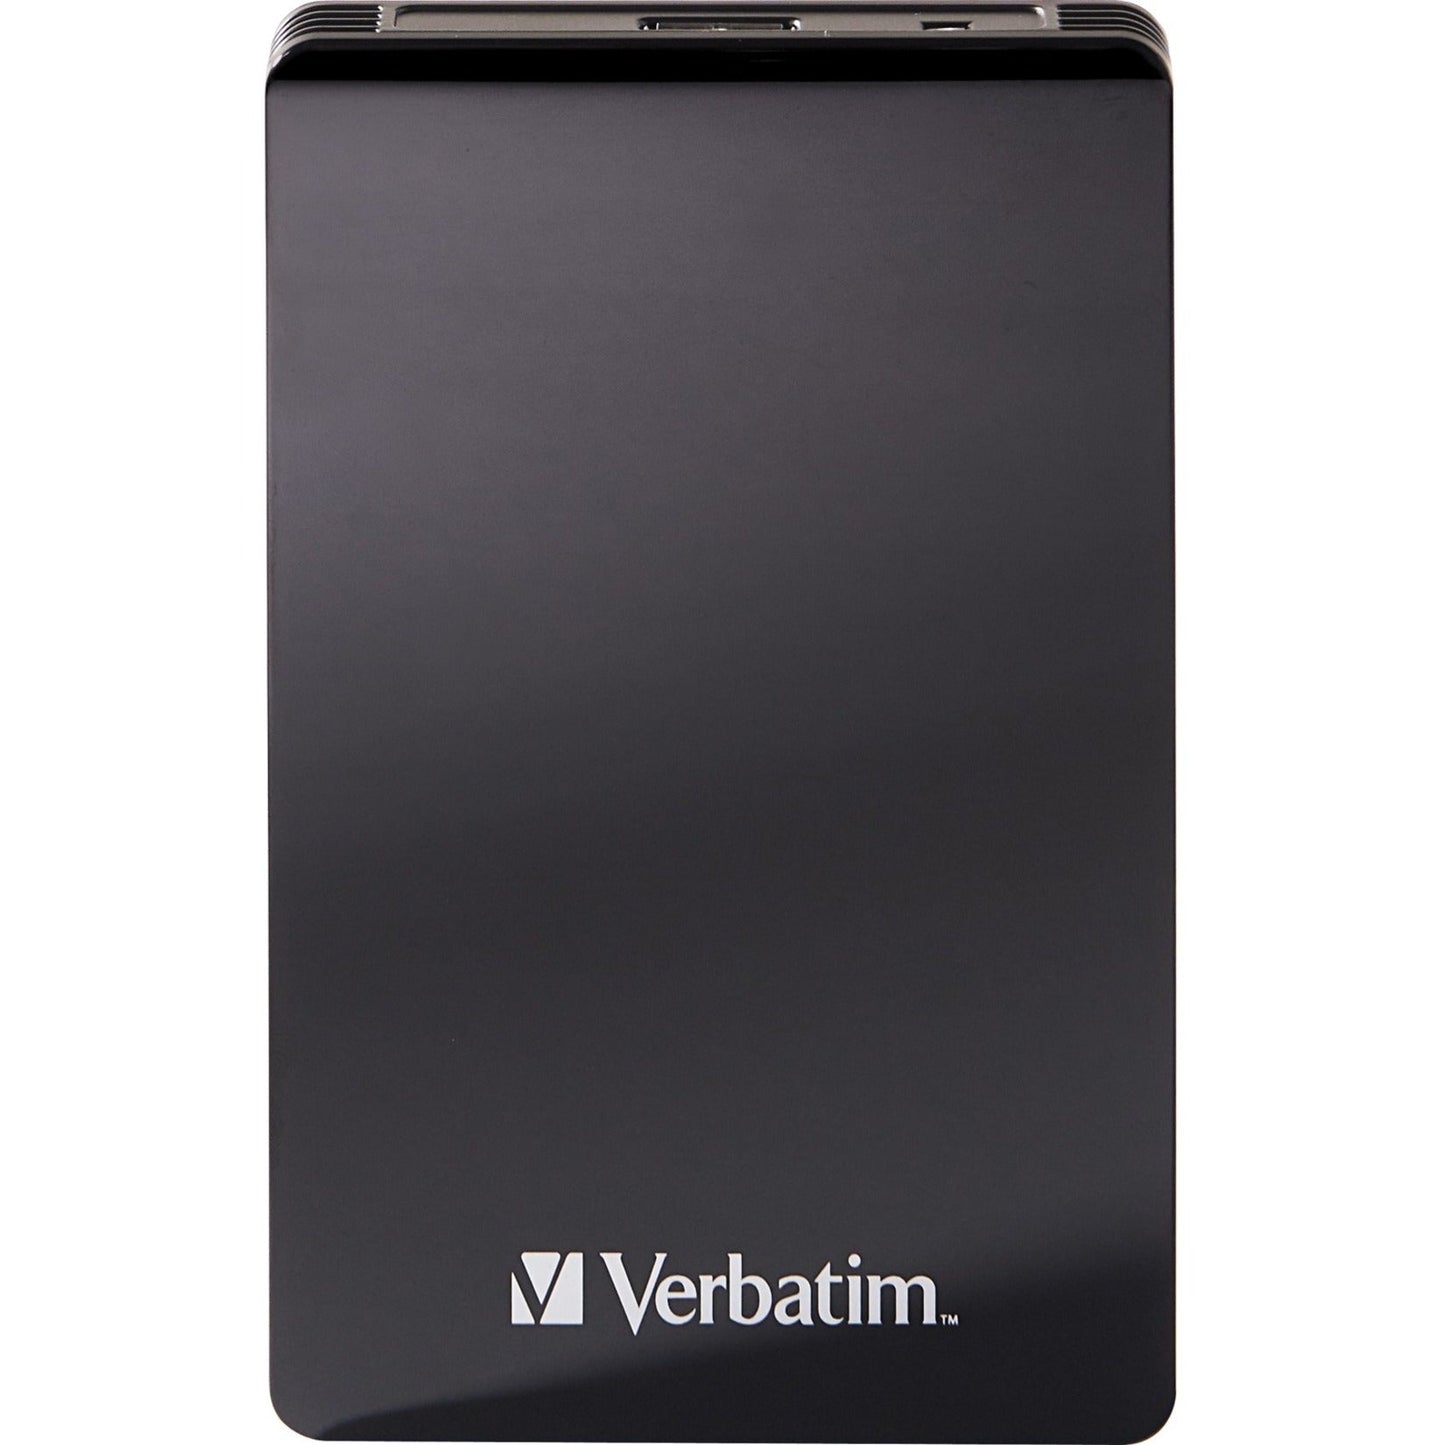 Verbatim 256GB Vx460 External SSD USB 3.1 Gen 1 - Black